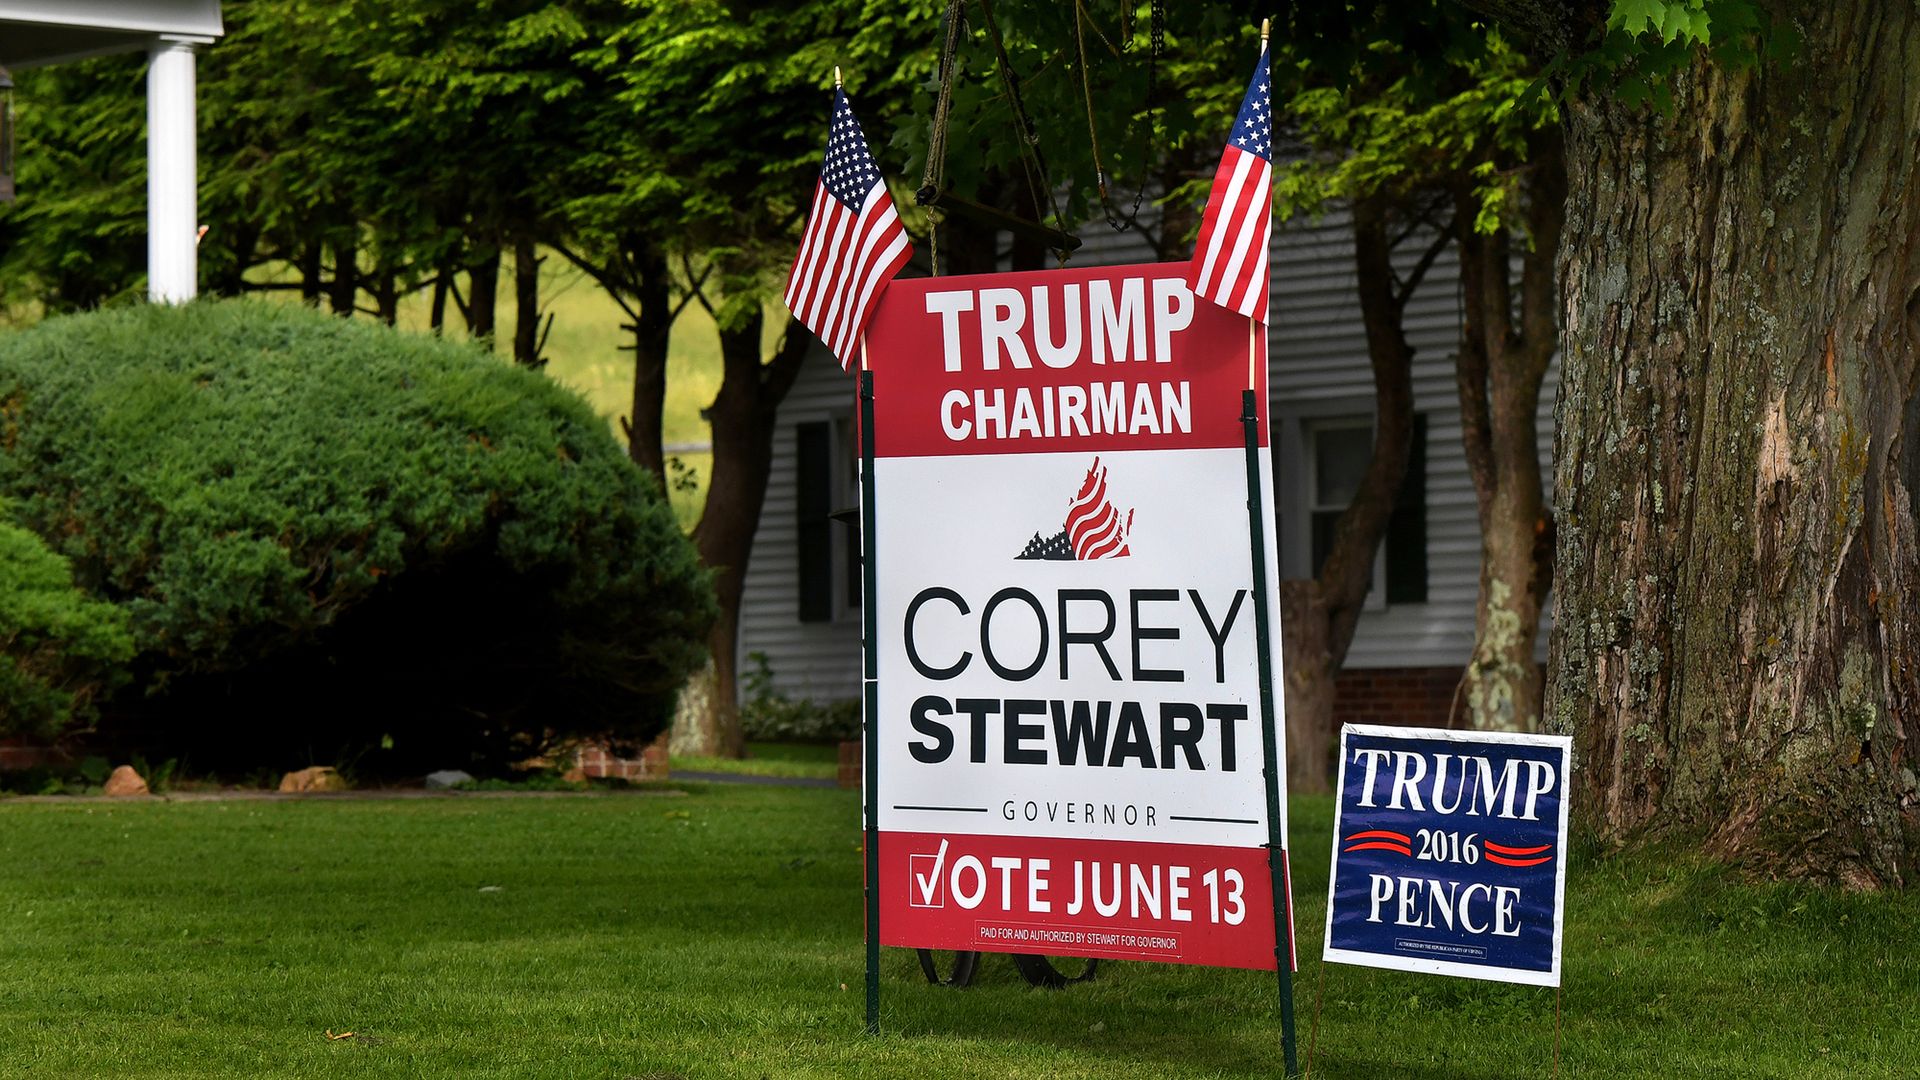 A campaign yard sign for Corey Stewart, calling him "Trump chairman." 